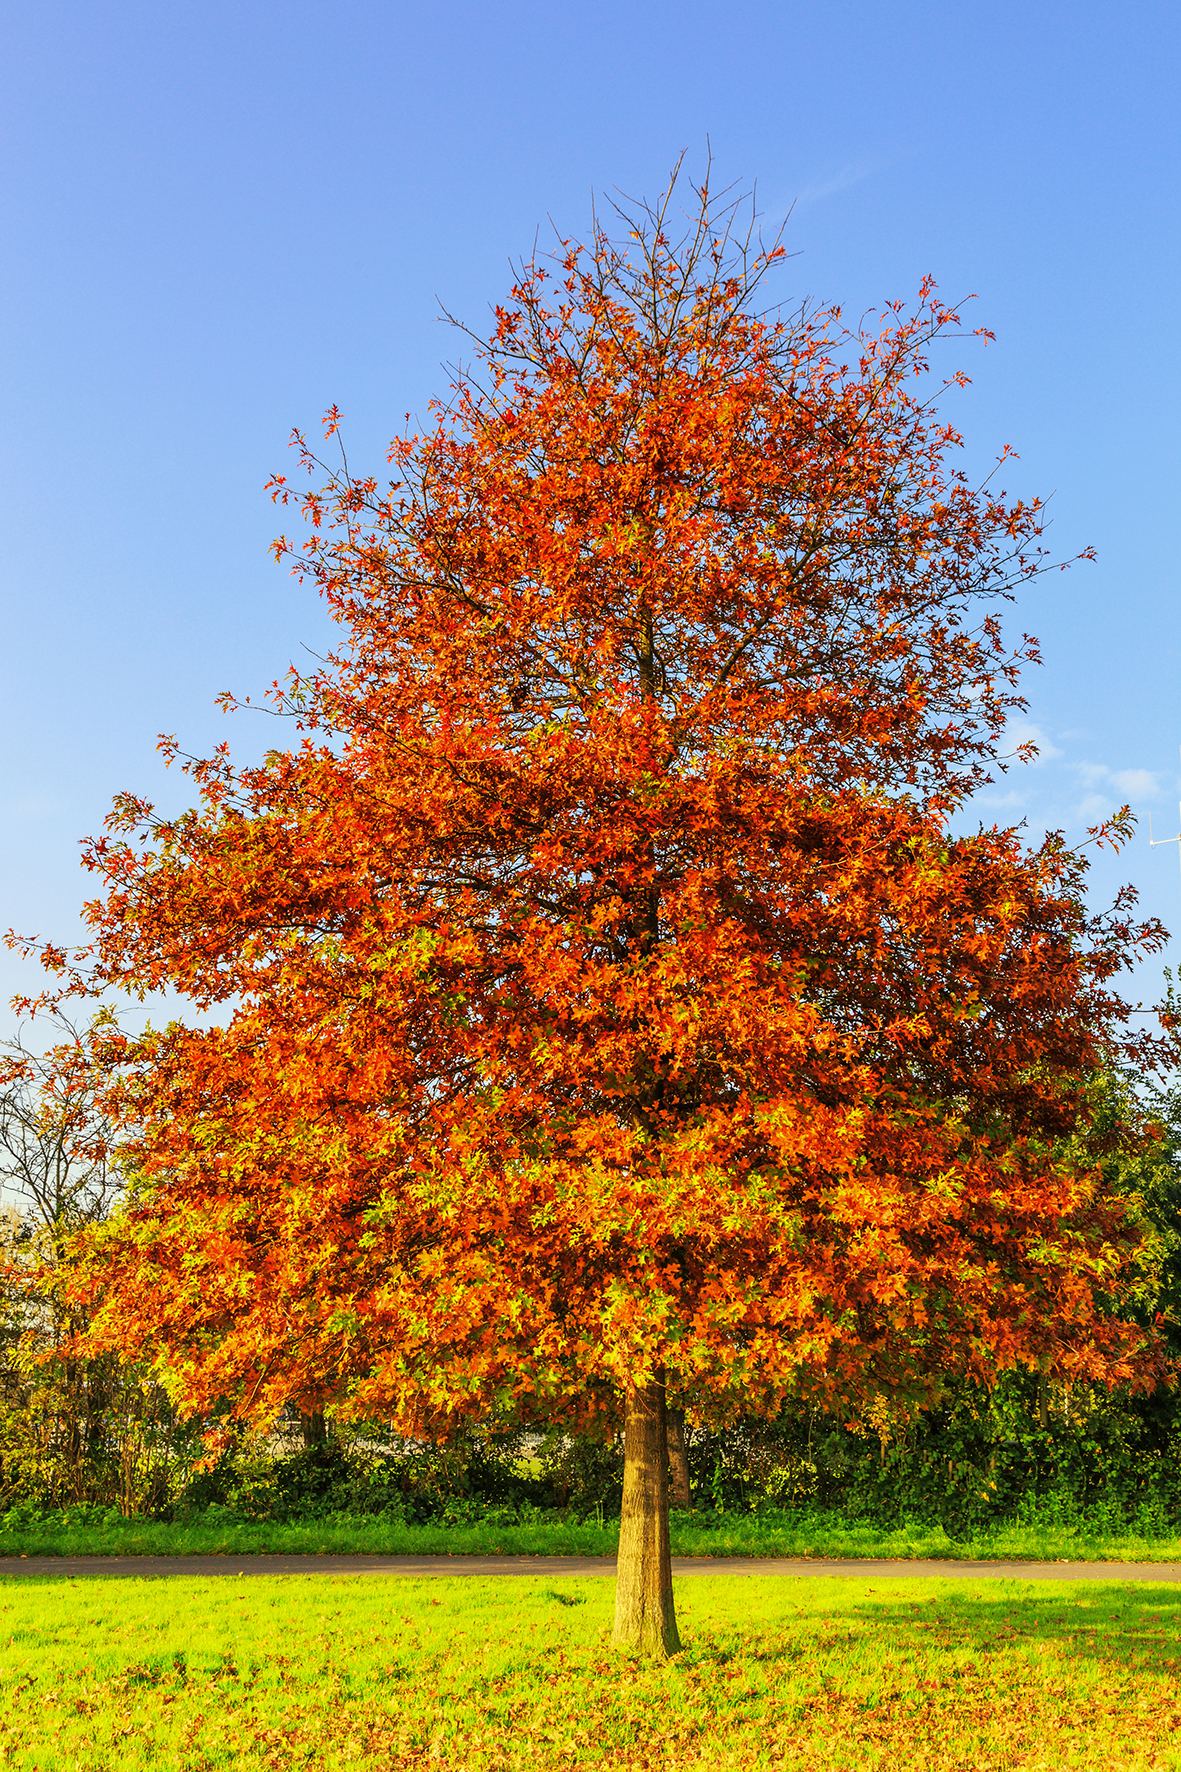 Seedeo® Sumpf-Eiche (Quercus palustris) Pflanze ca. 30 cm - 50 cm hoch